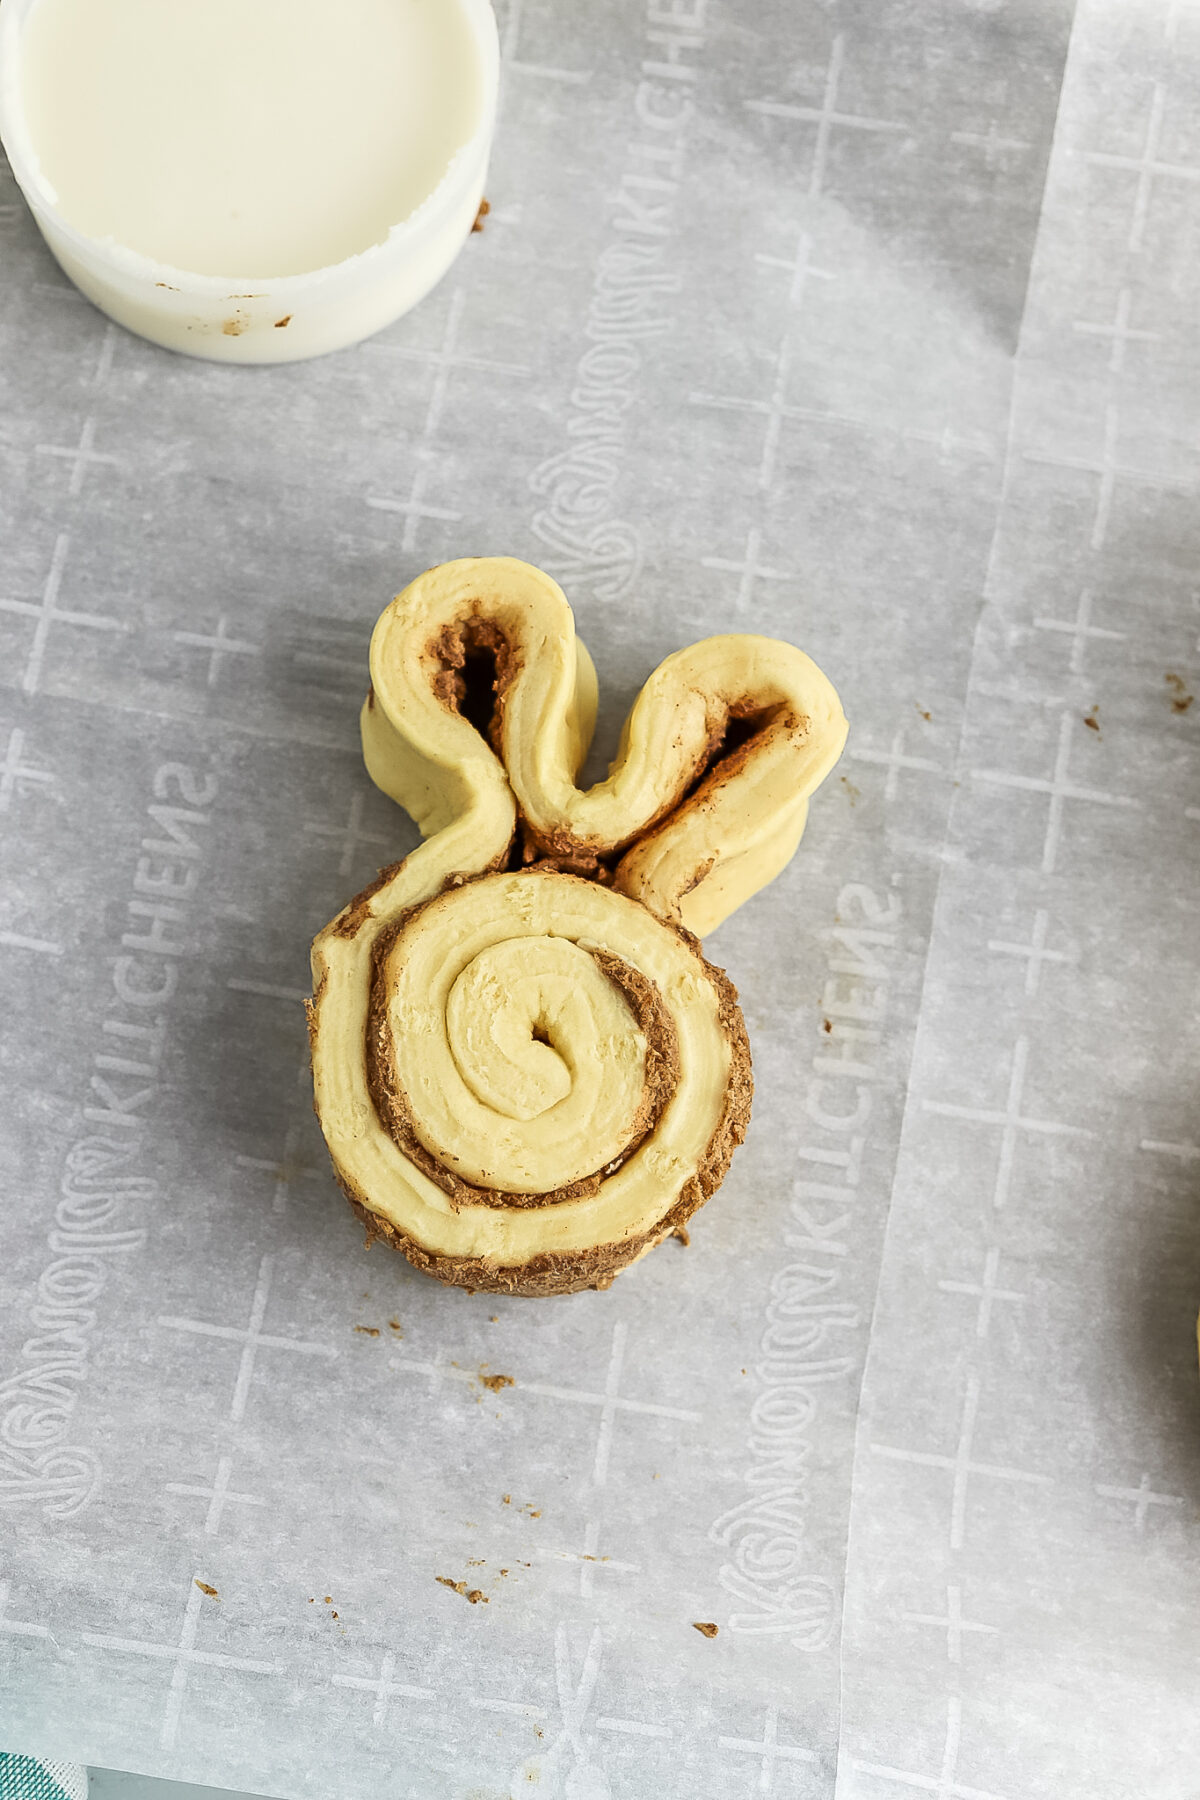 shaping the cinnamon roll bunnies with ears.